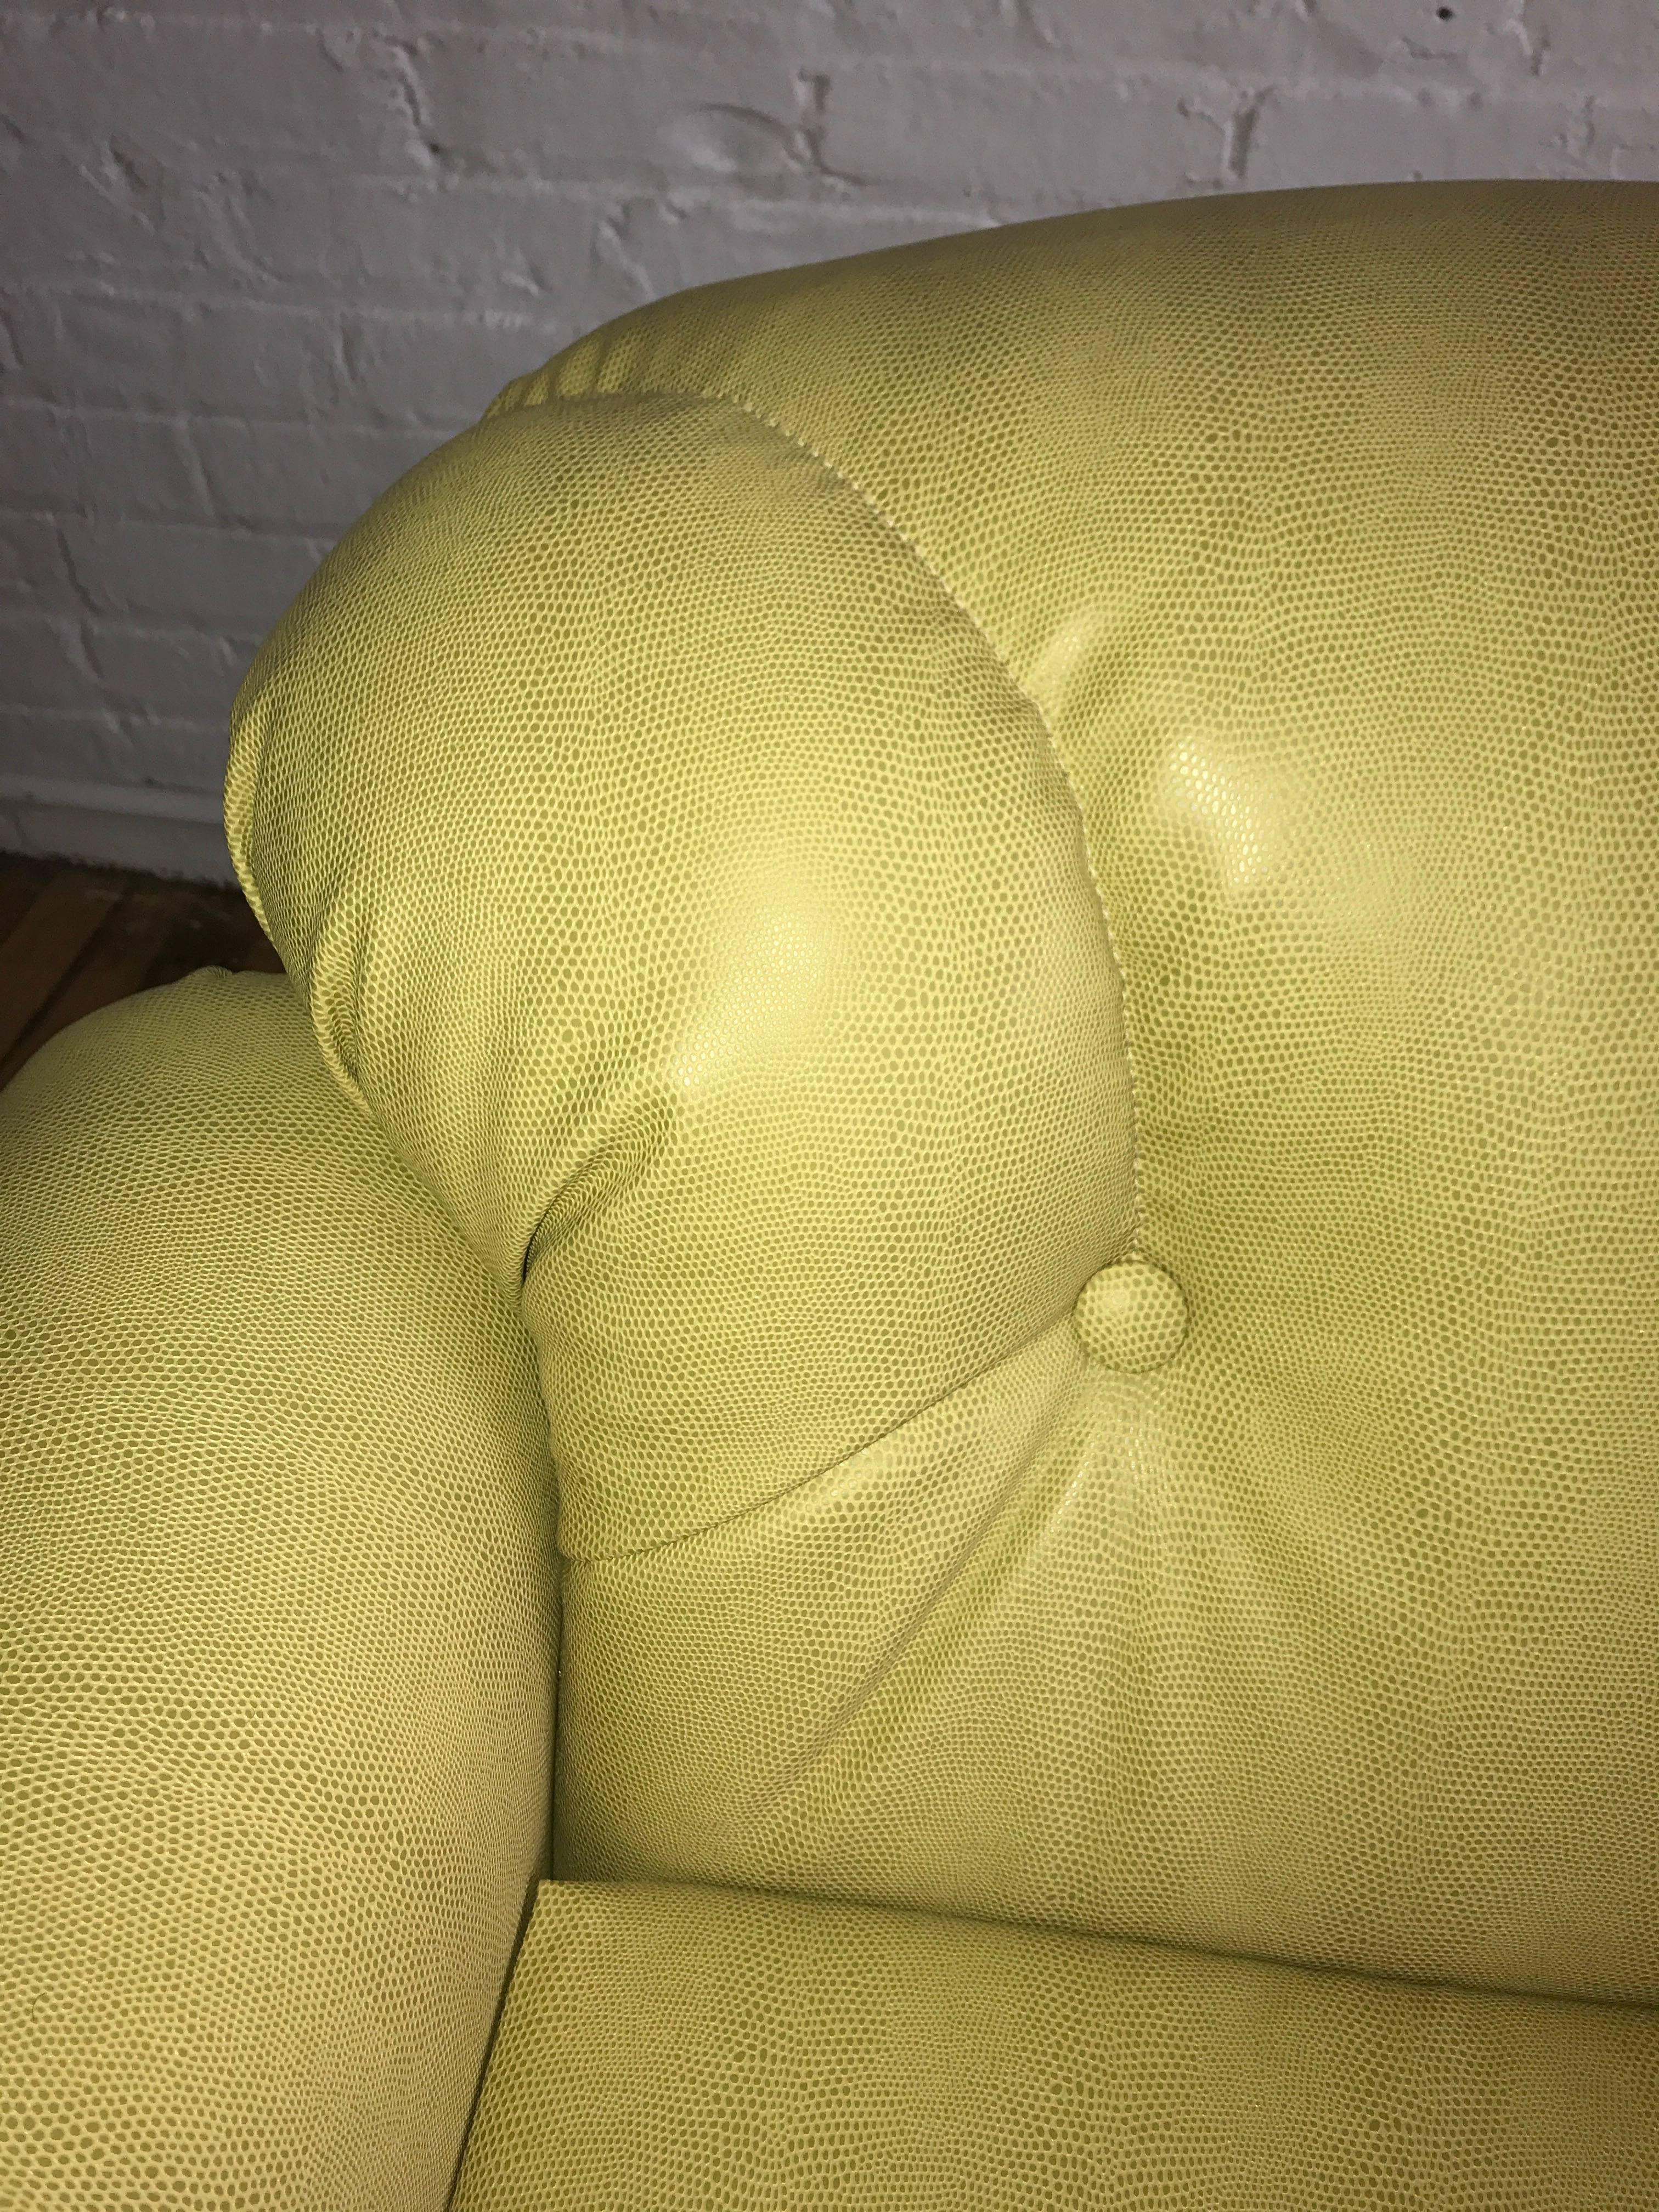 Mod Overstuffed Green Vinyl Lounge Chair For Sale 2